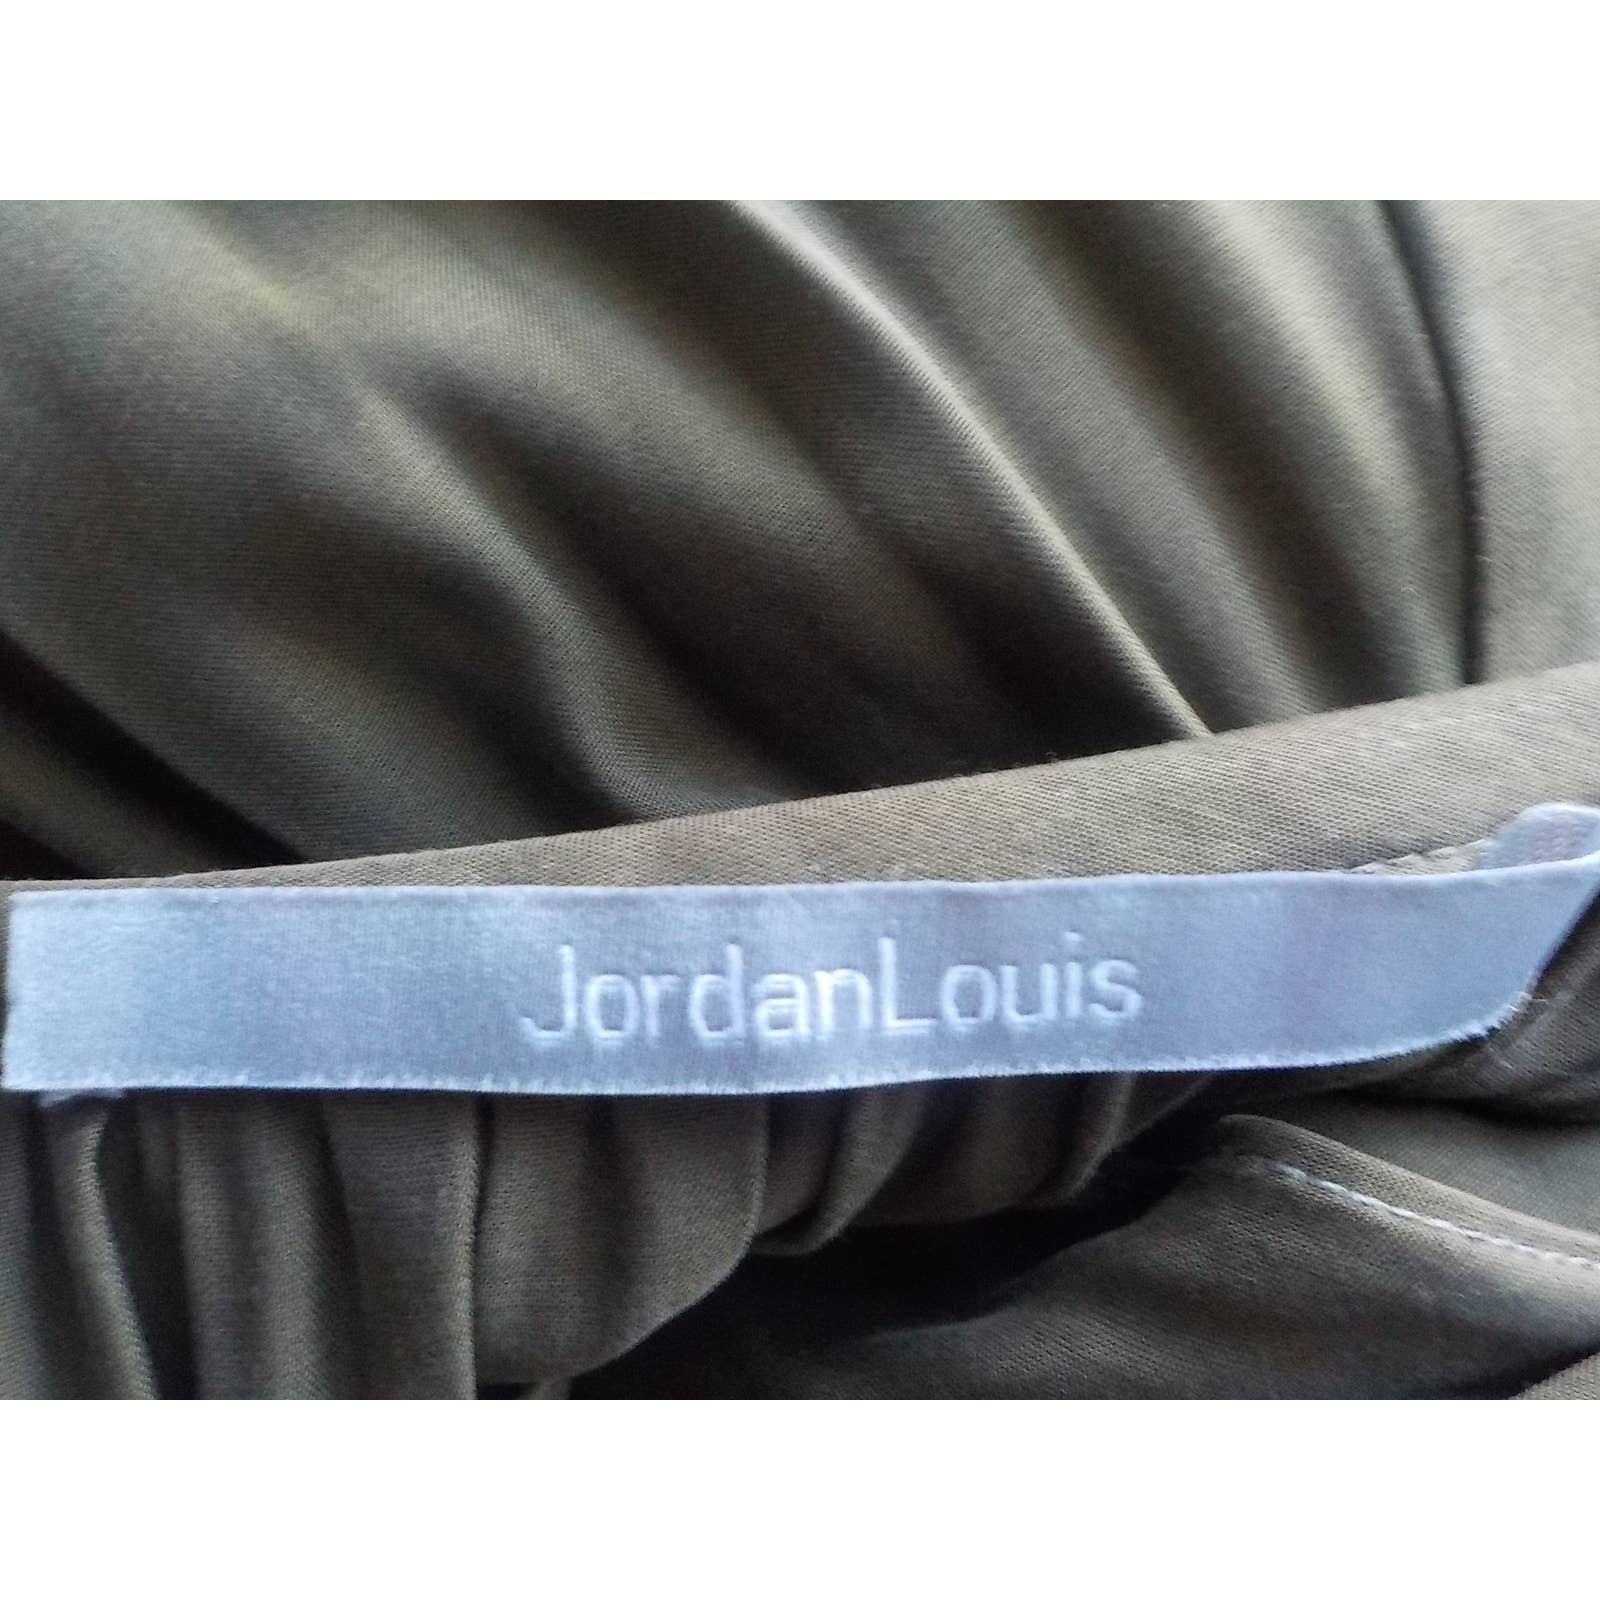 good price Jordan Louis Green Blouse Top Tie Front Hook Eye Long open Sleeves Fits S/M gJlVabbCD Cheap